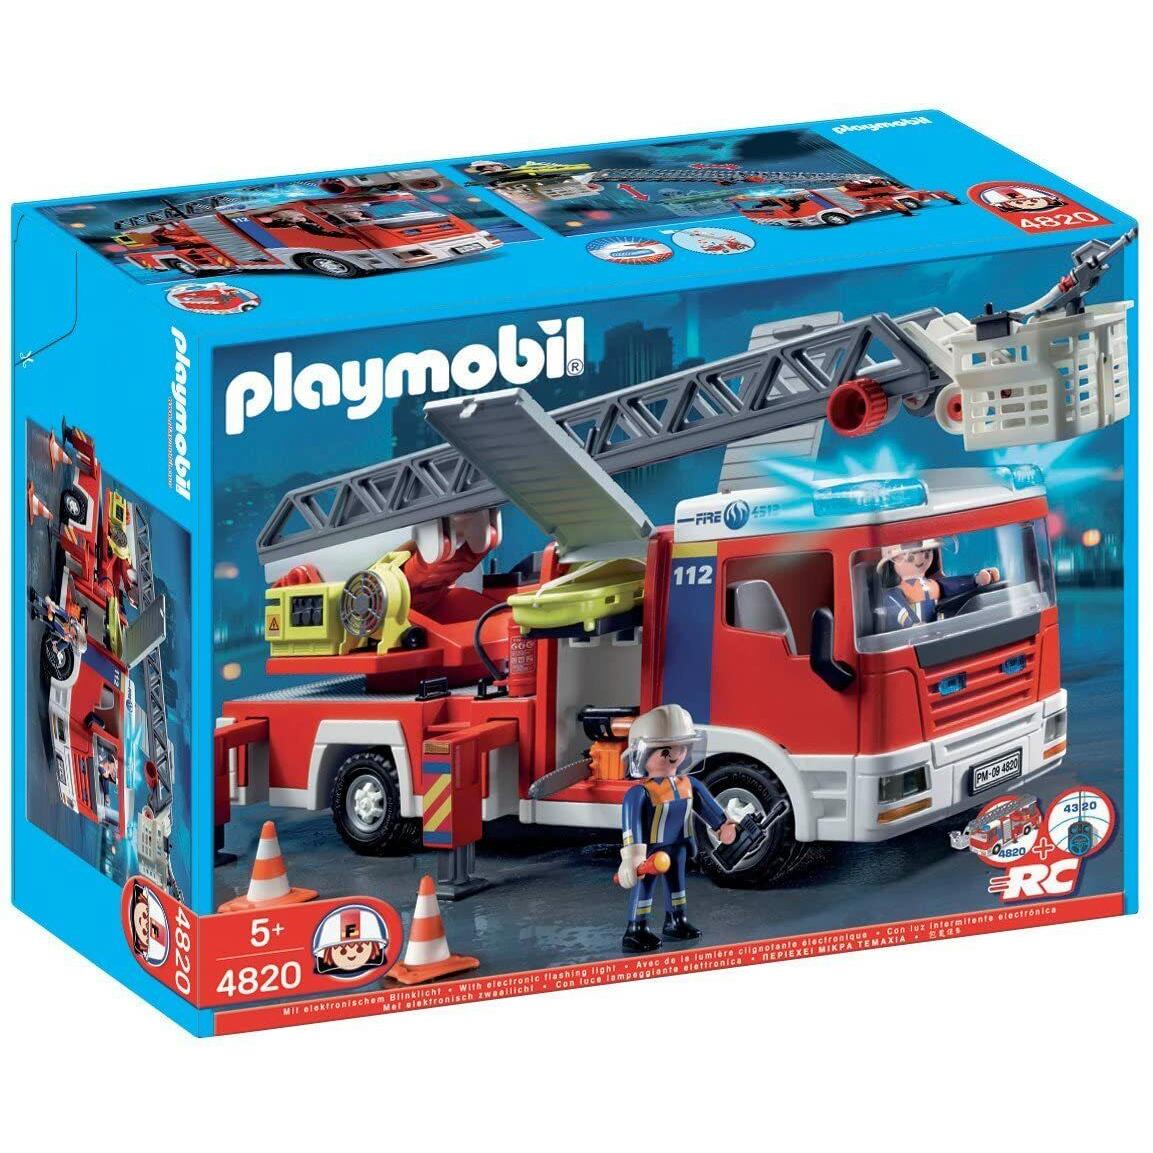 Playmobil 4820 Ladder Unit Fire Truck Rescue Firemen